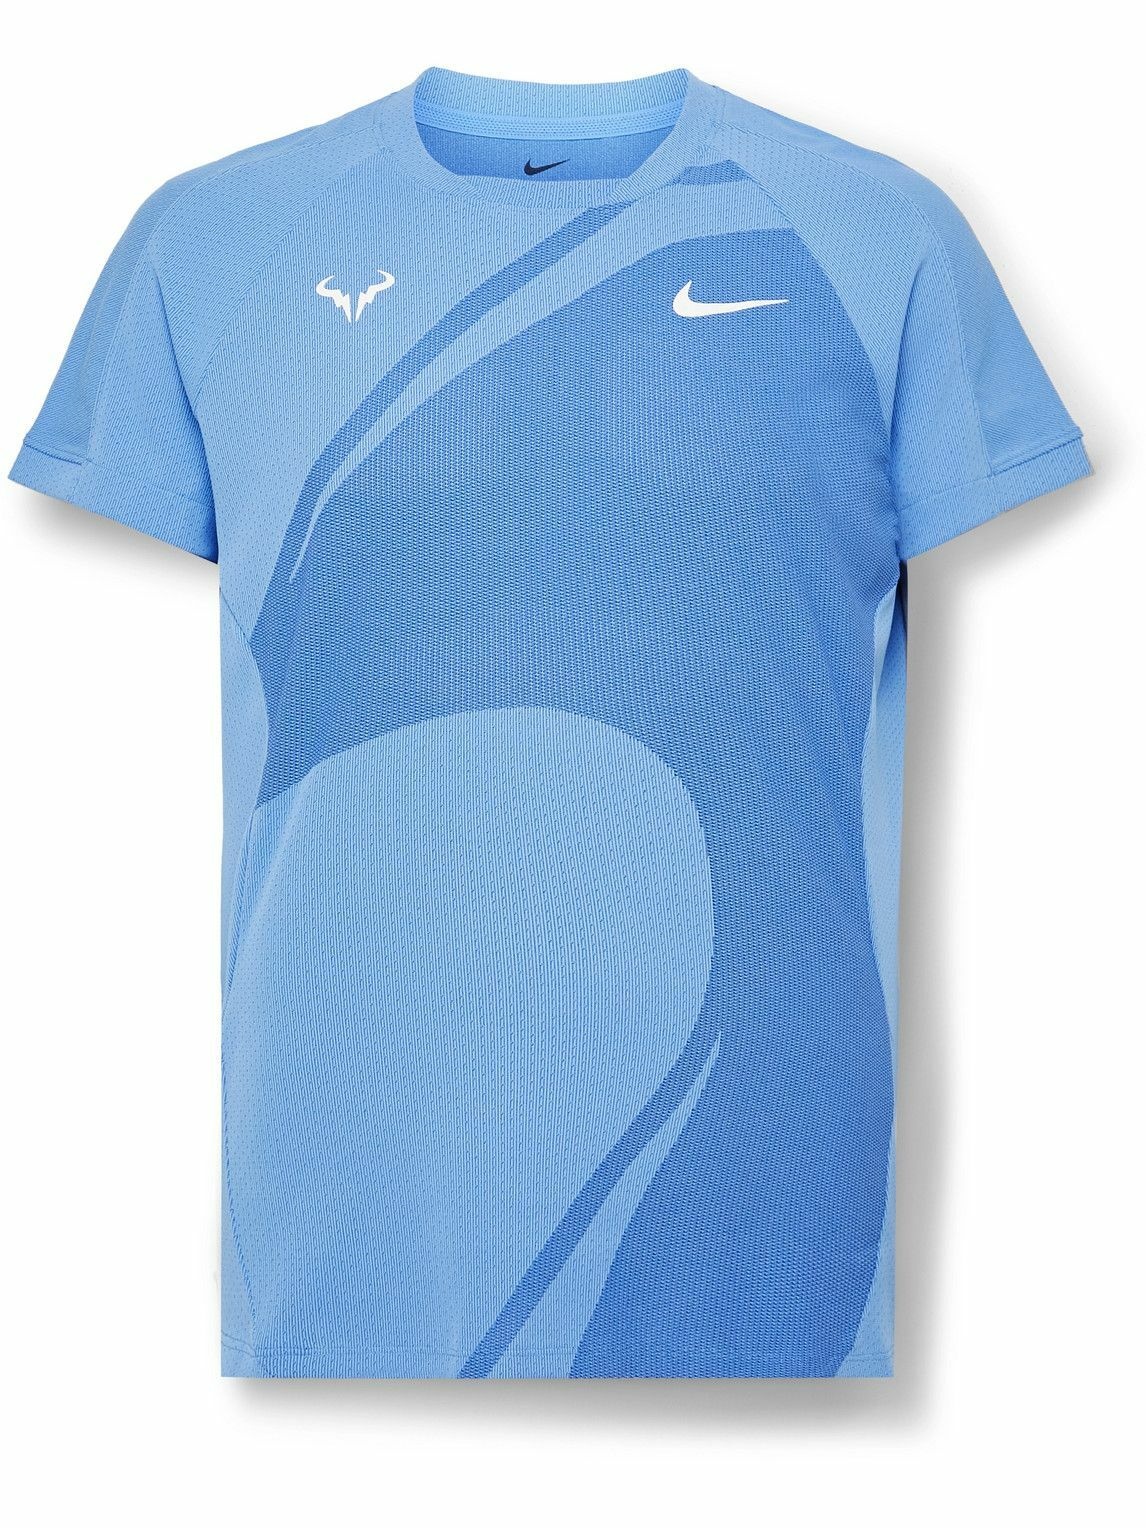 Nike Tennis - NikeCourt Rafa Slim-Fit Dri-FIT ADV T-Shirt - Blue Nike ...